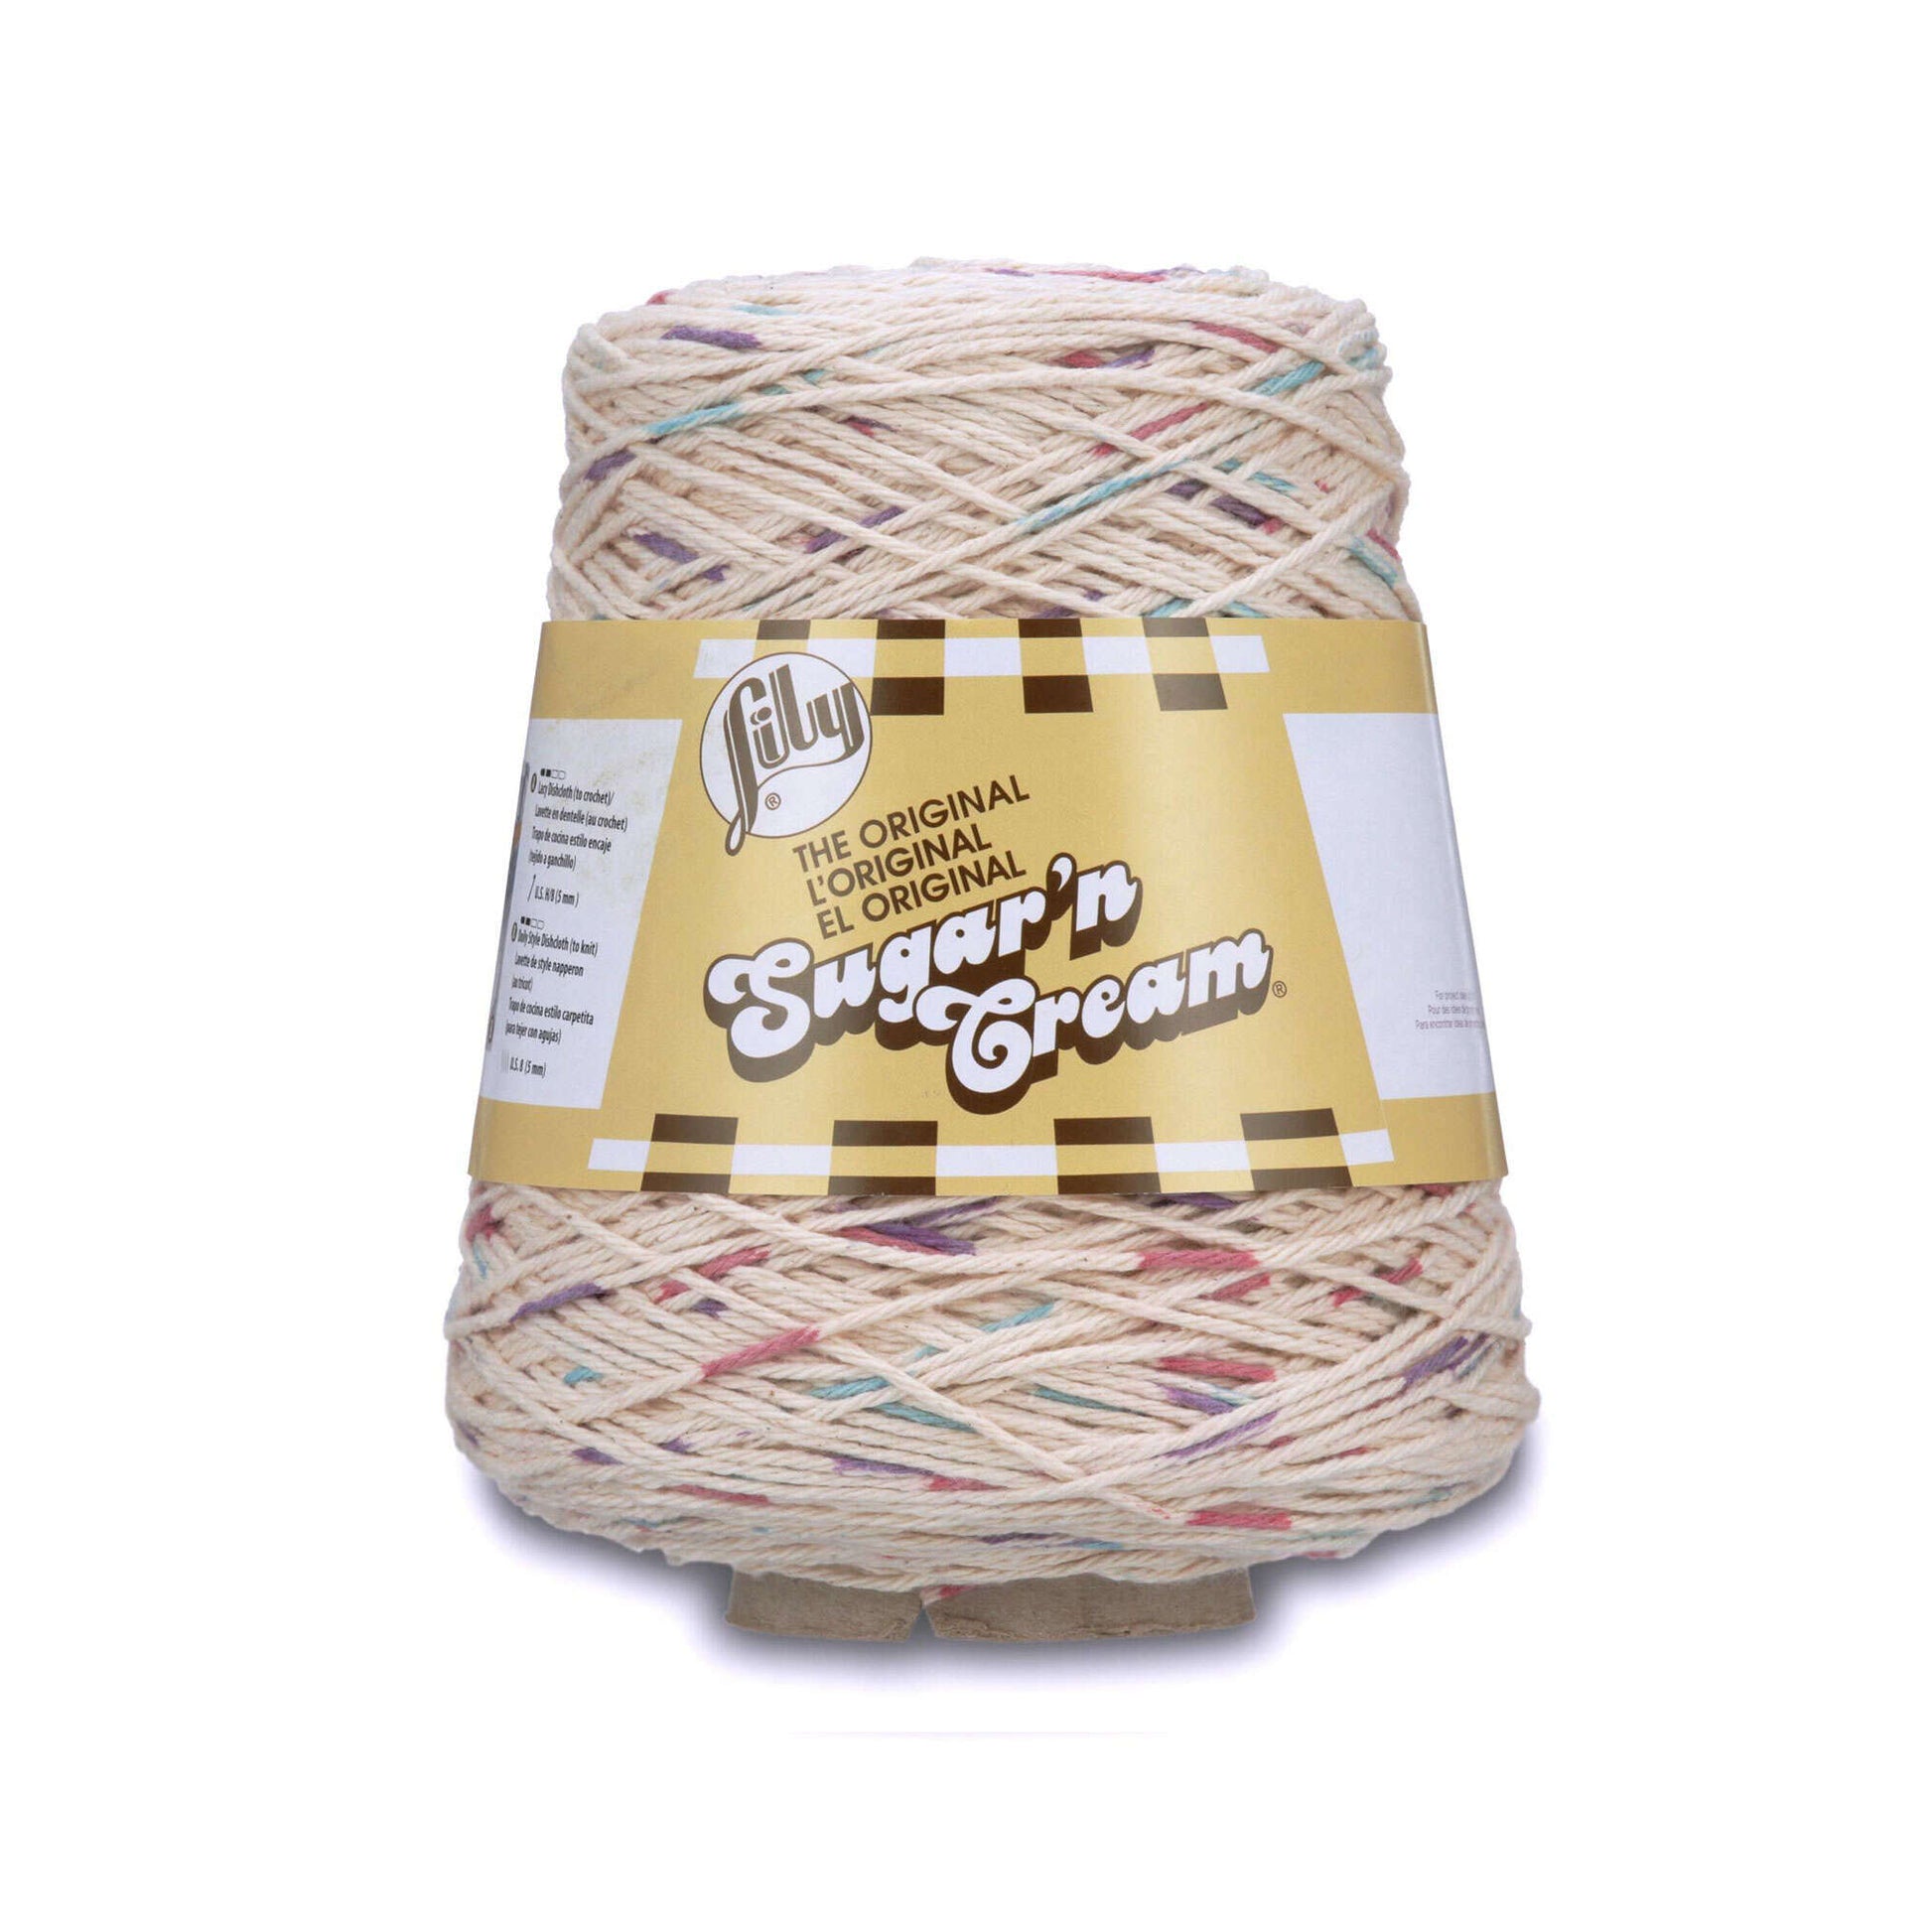  Lily Sugar'n Cream Cotton Cone Yarn, 14 oz, Black , 1 Cone :  Kitchen Cotton Yarn : Arts, Crafts & Sewing